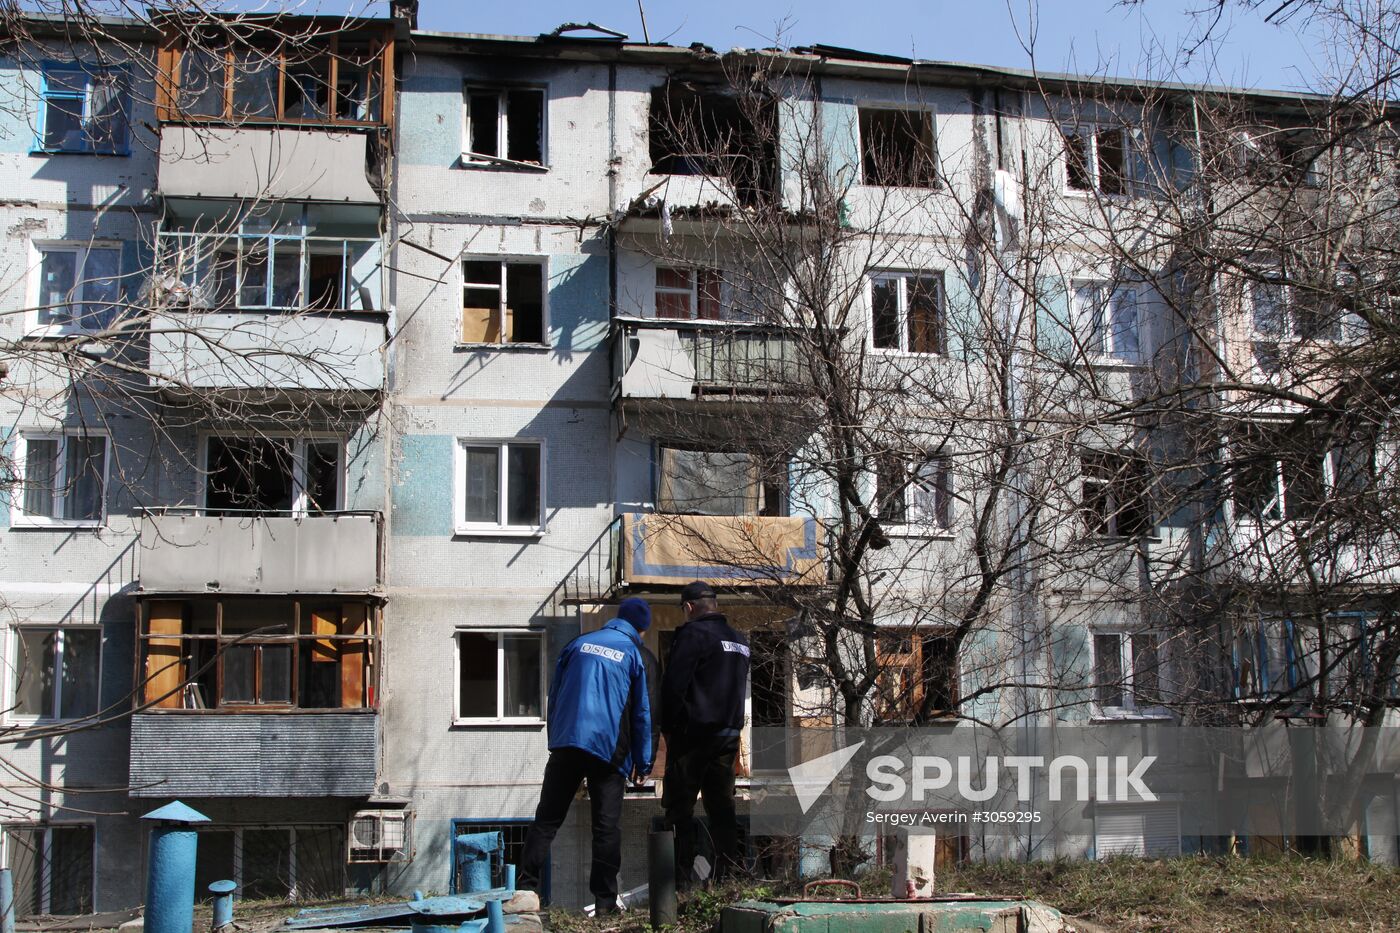 Donetsk shelling aftermath